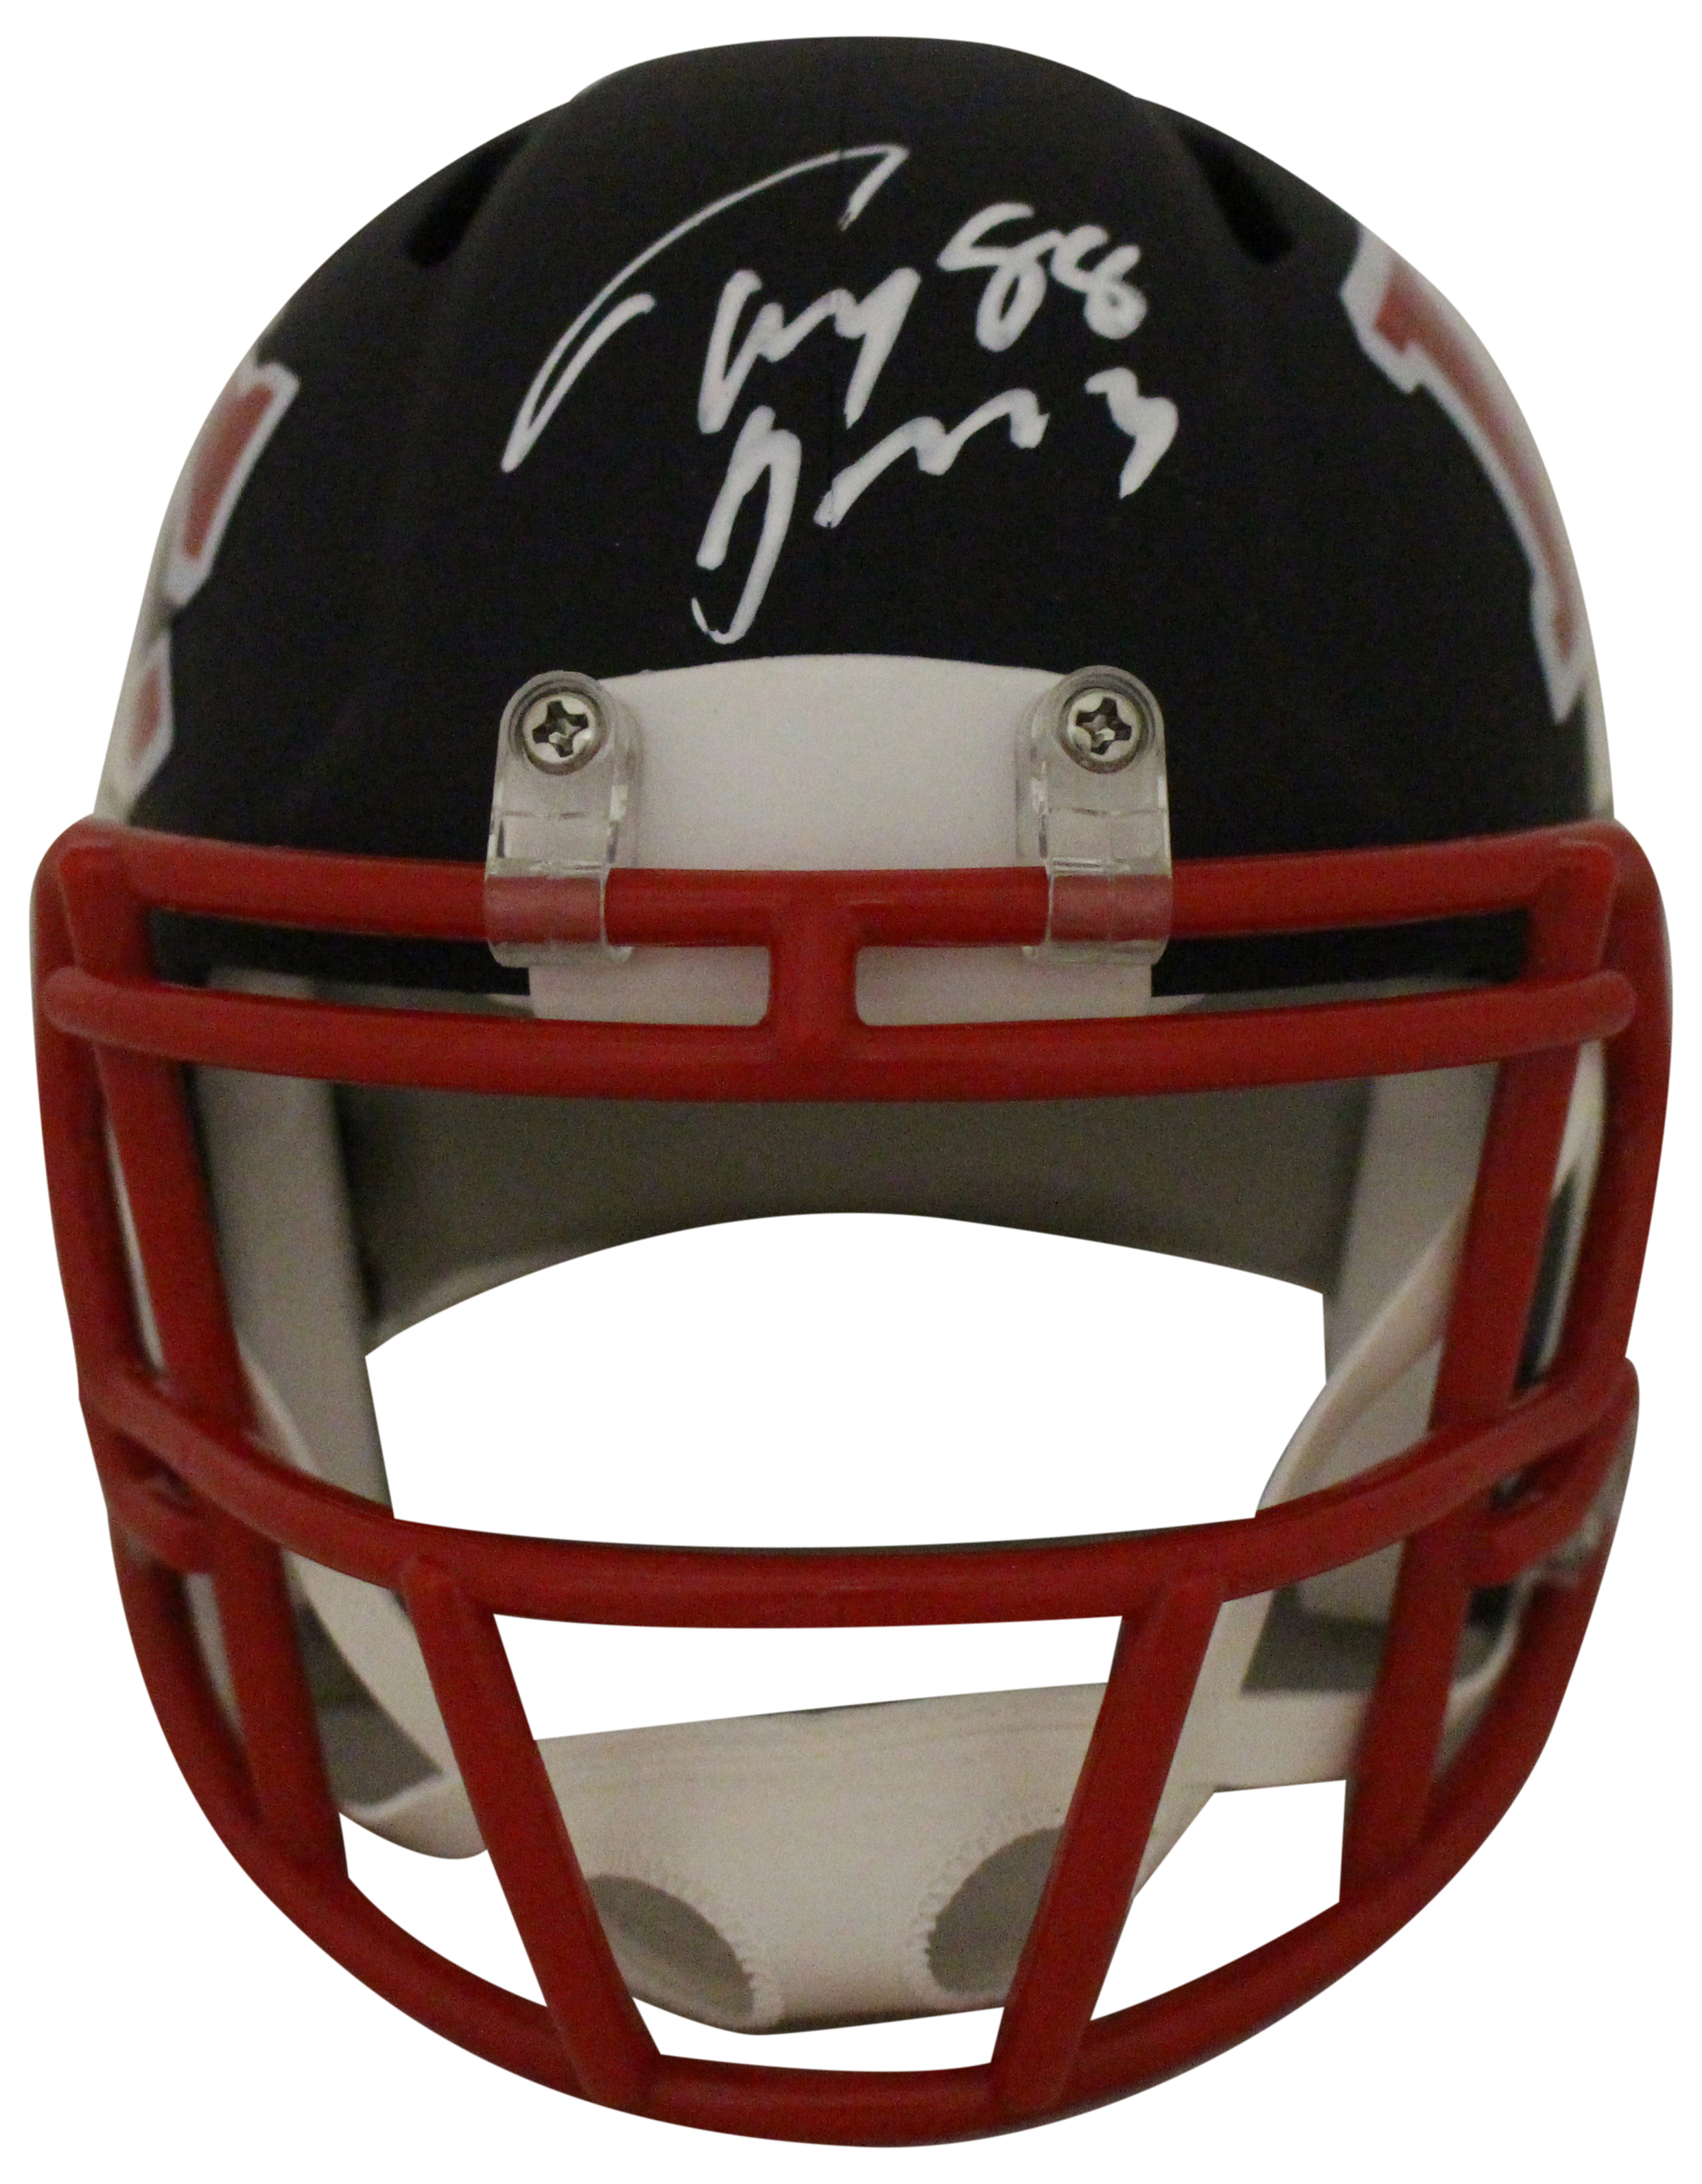 Tony Gonzalez Autographed/Signed Kansas City Chiefs AMP Mini Helmet BAS 28920